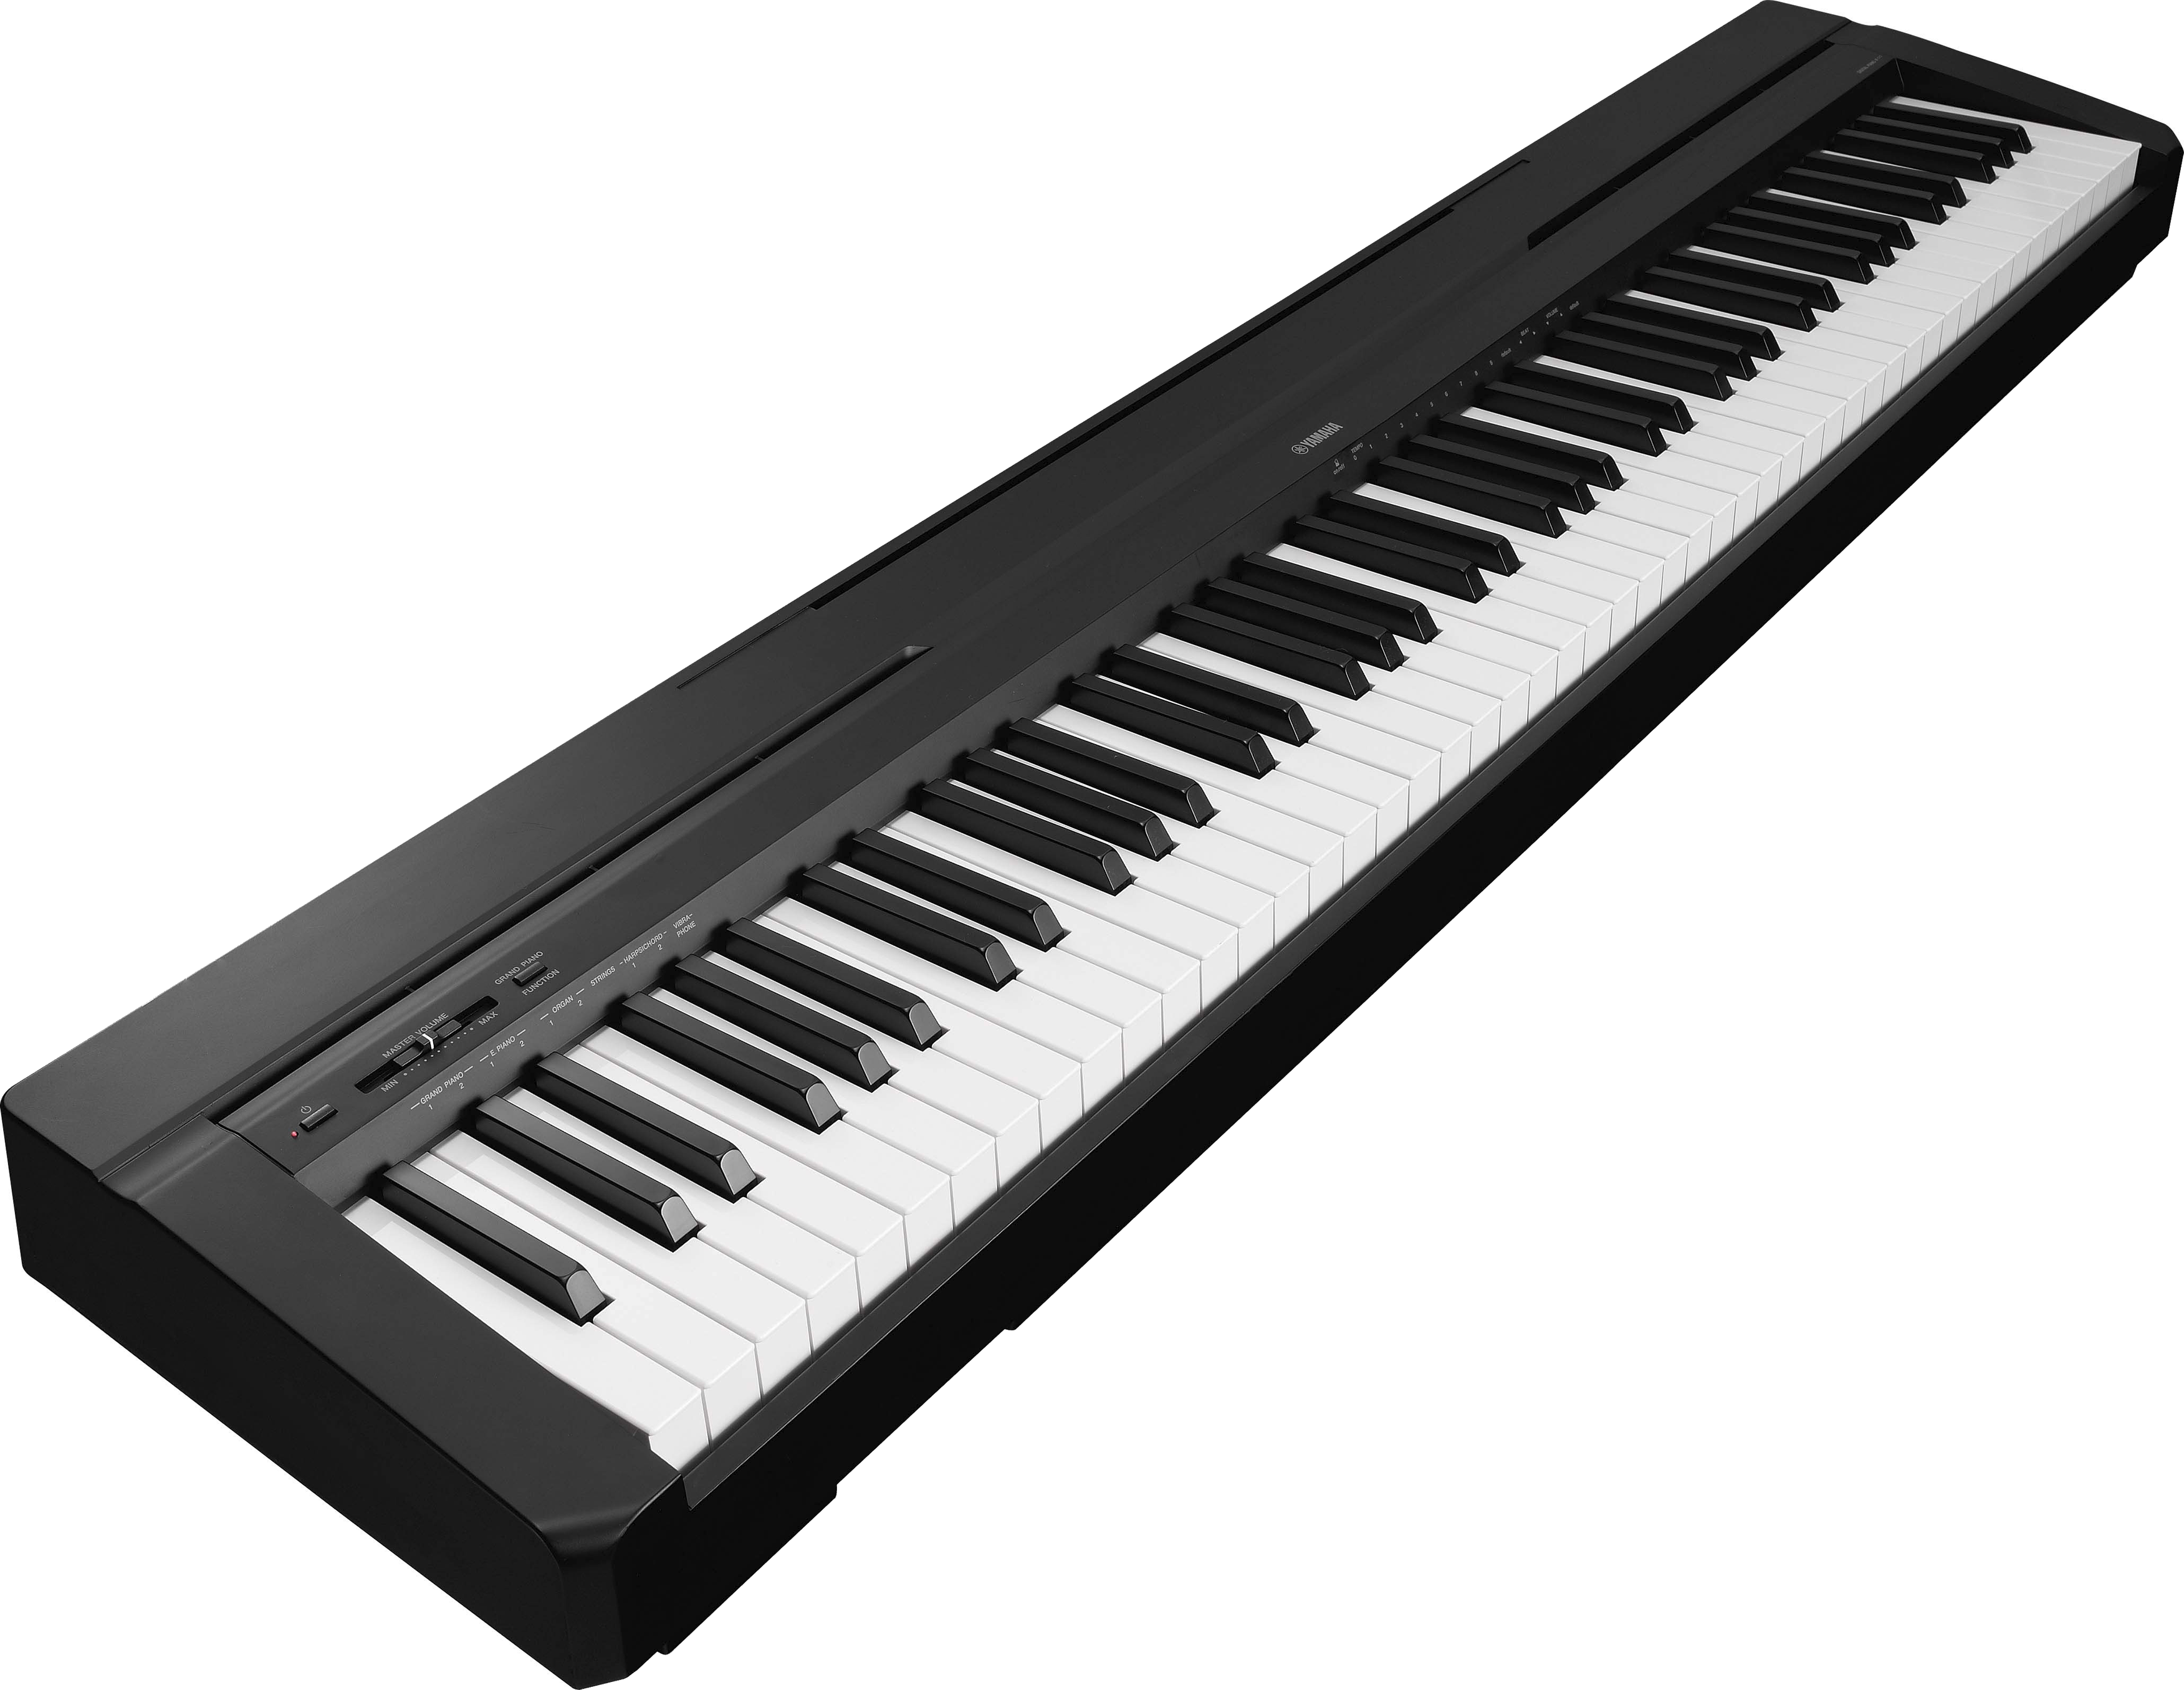 550 Piano Keyboard free clipart.